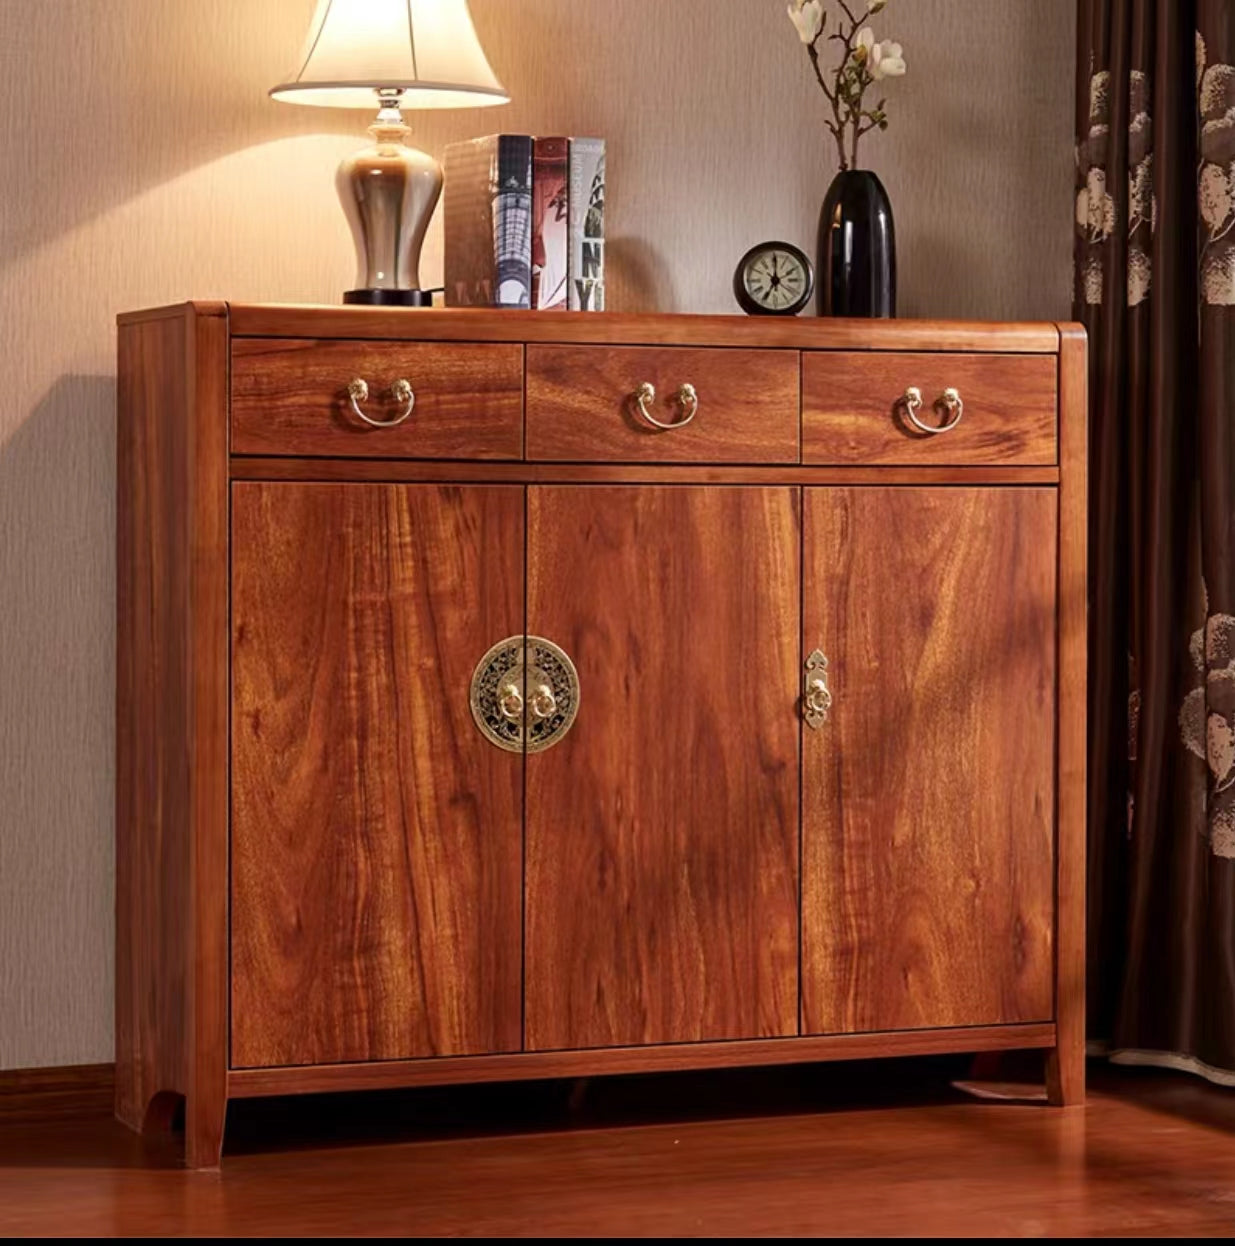 3 Doors & Drawers Cherry Wood Shoe Storage Cabinet - 4 Seasons Home Gadgets